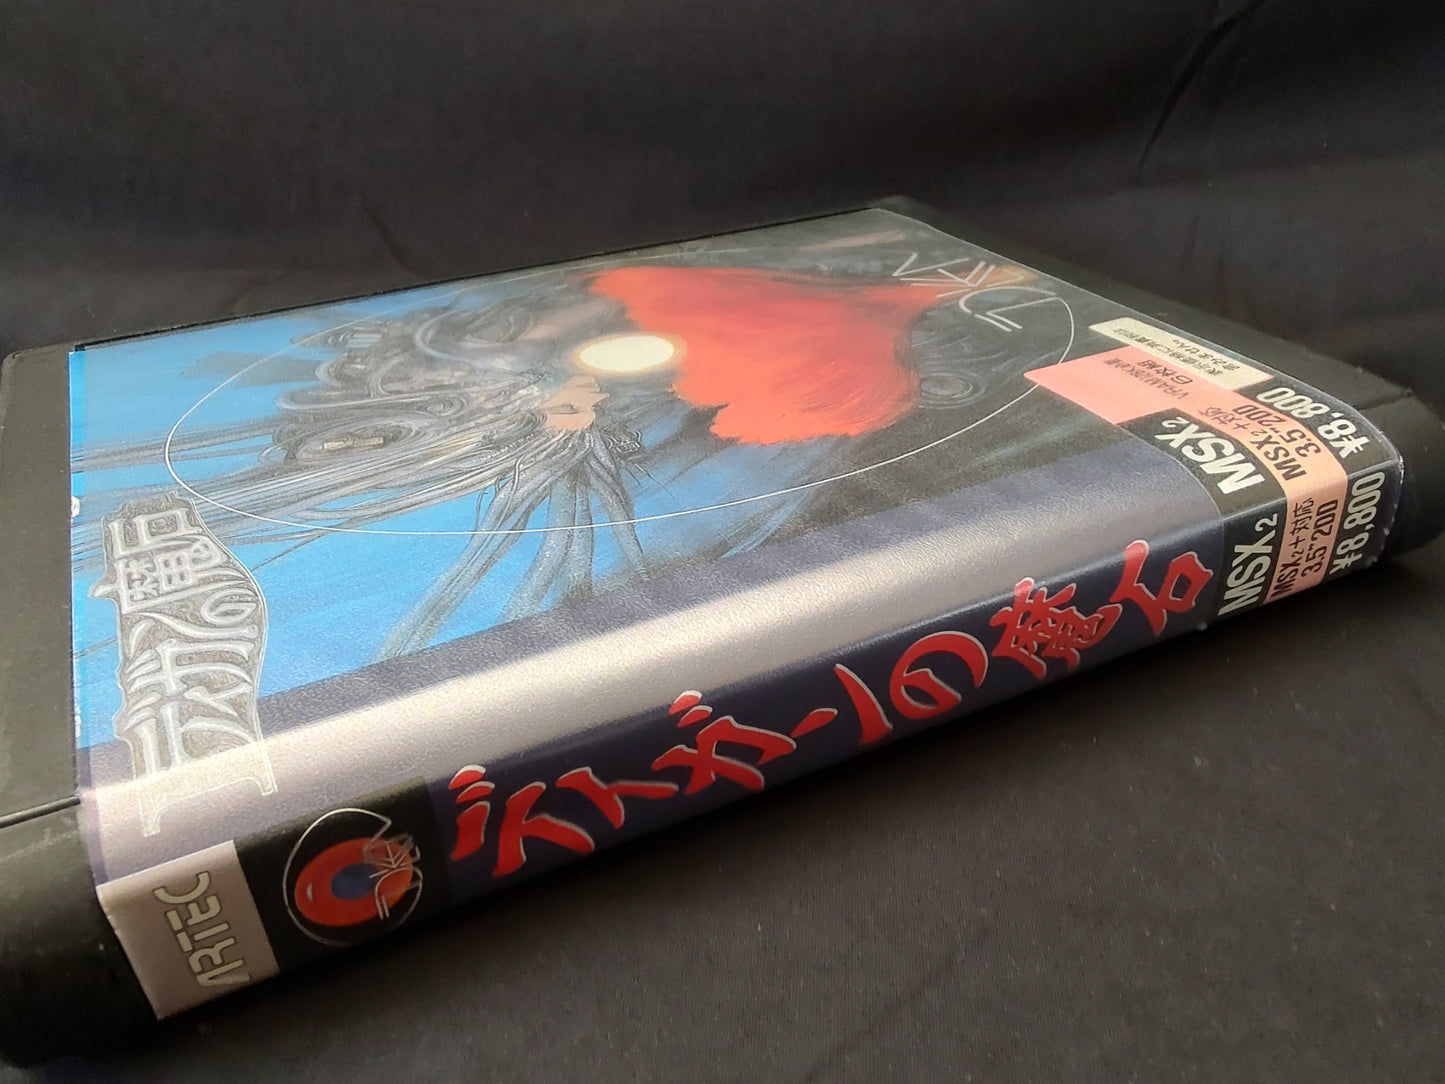 Digan no Maseki MSX2 3.5FDD,Game disk, w/Manual, Box set, Working-g0111-